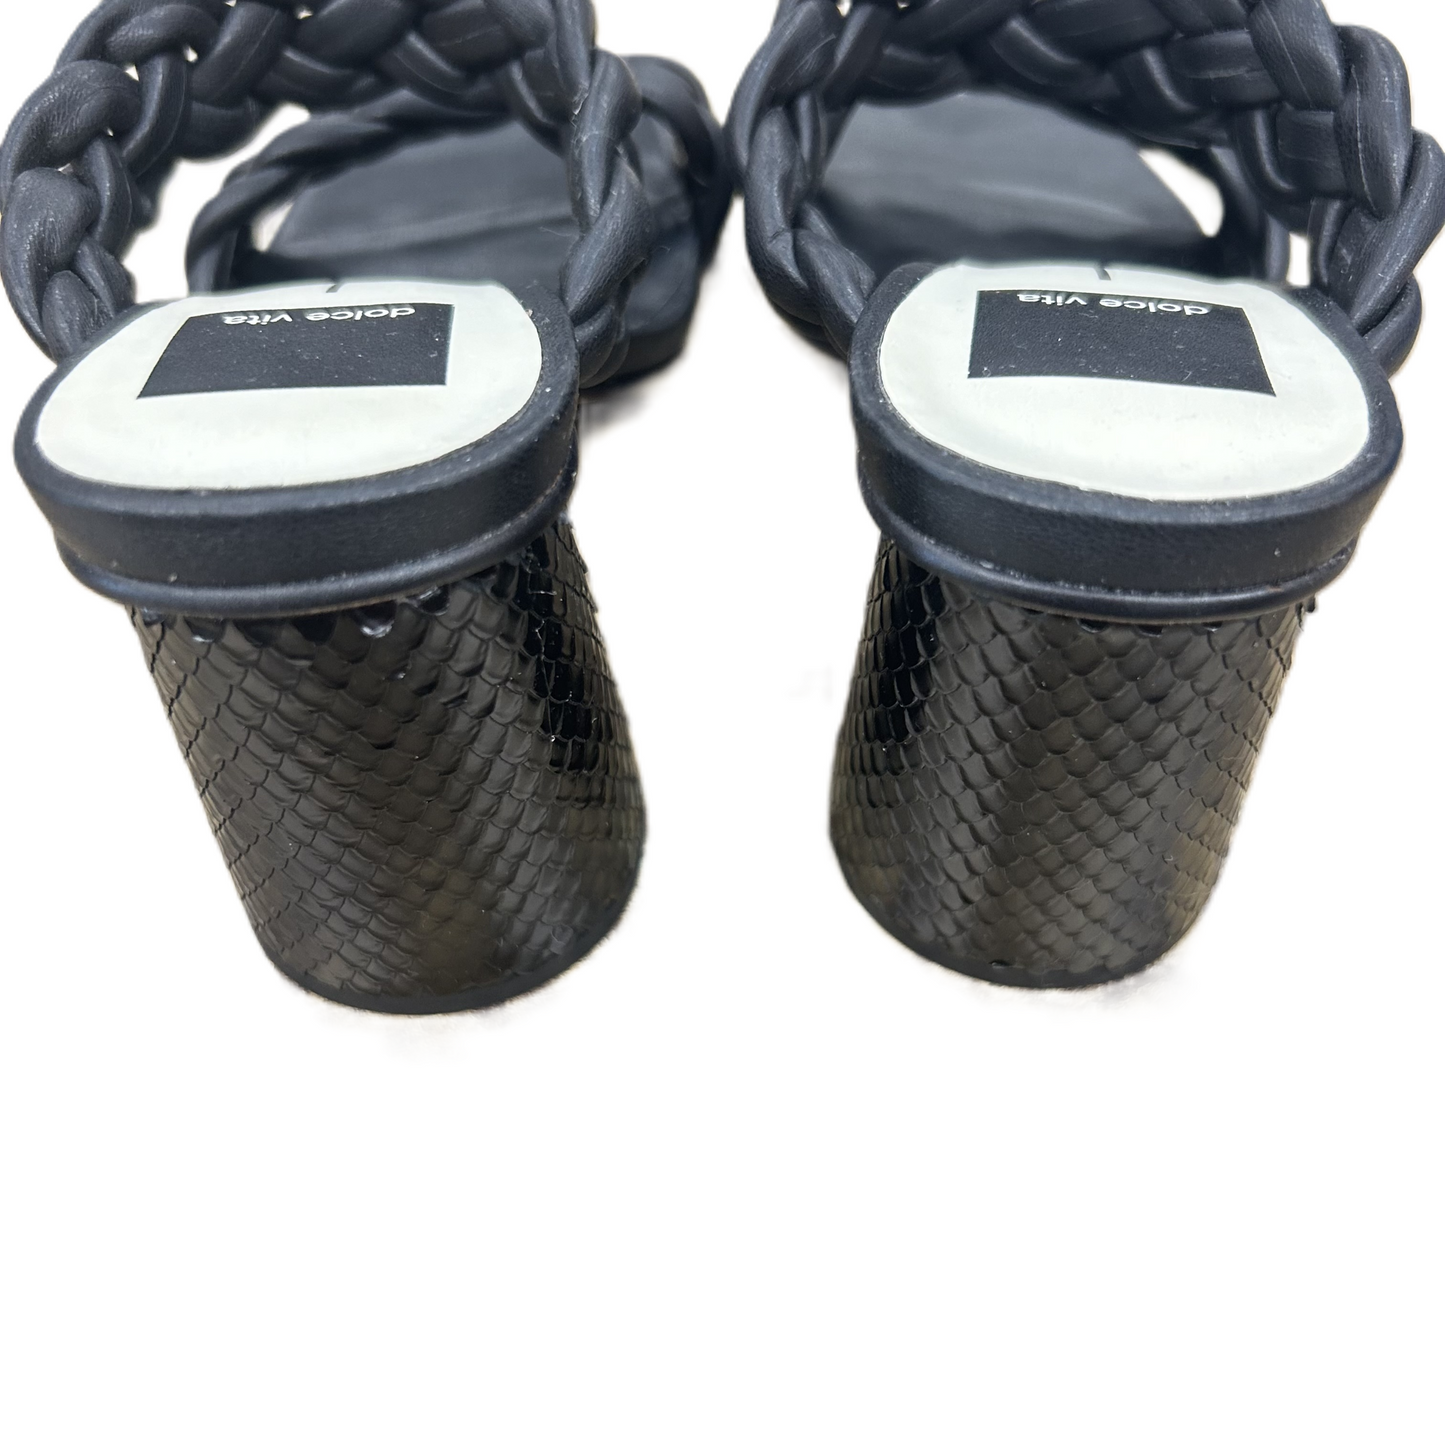 Black Sandals Heels Block By Dolce Vita, Size: 6